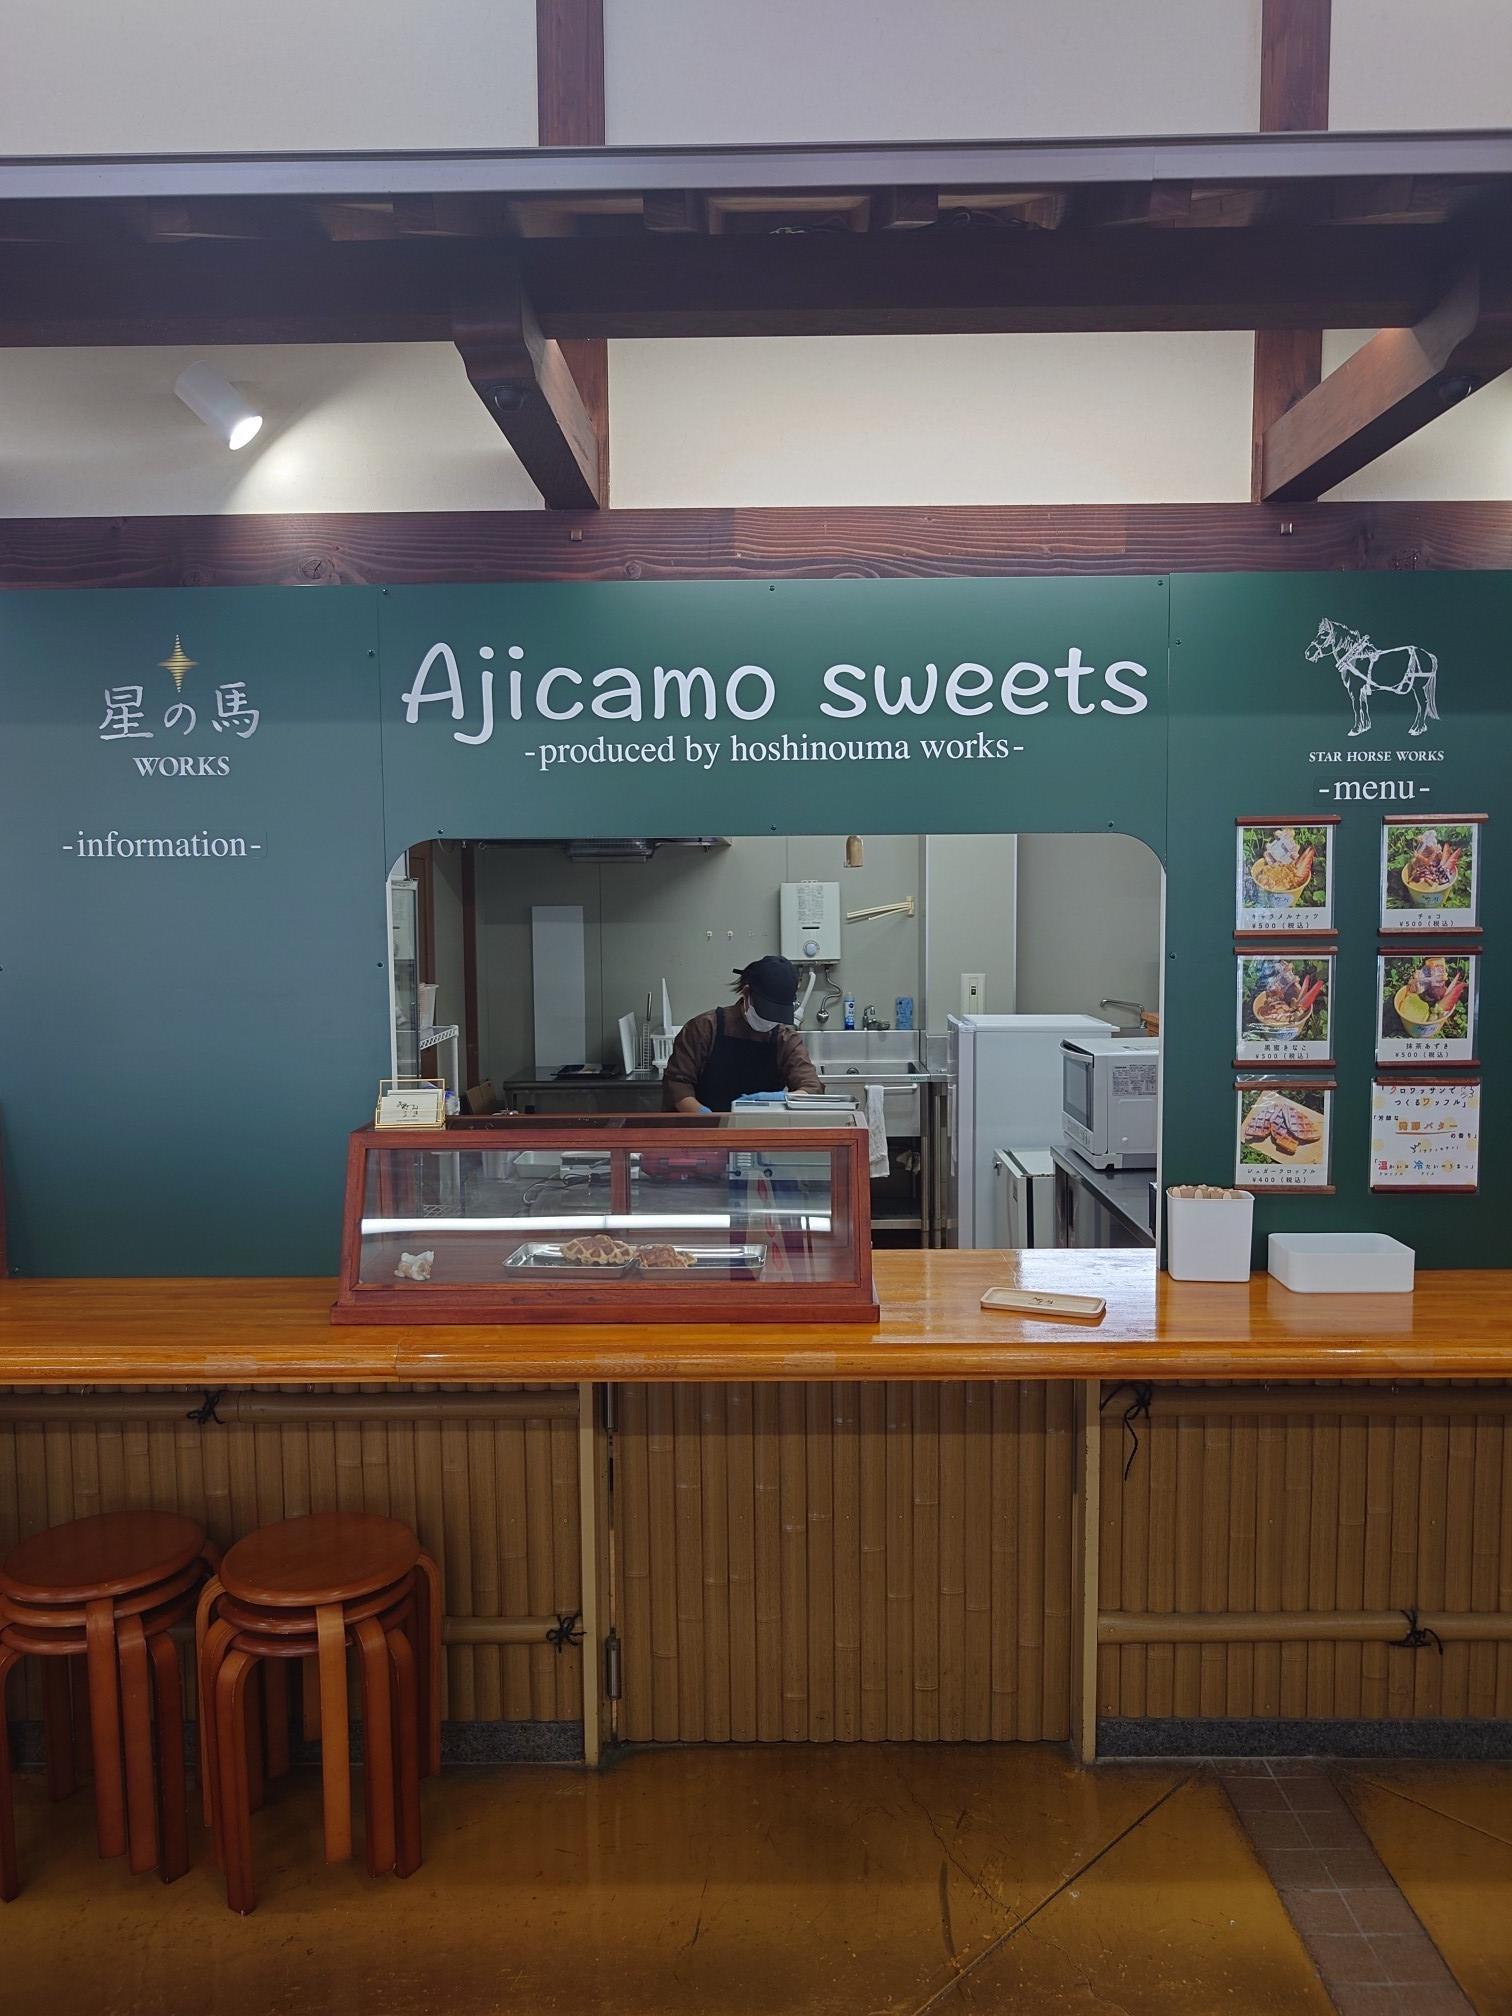 Ajicomo sweetsオープン